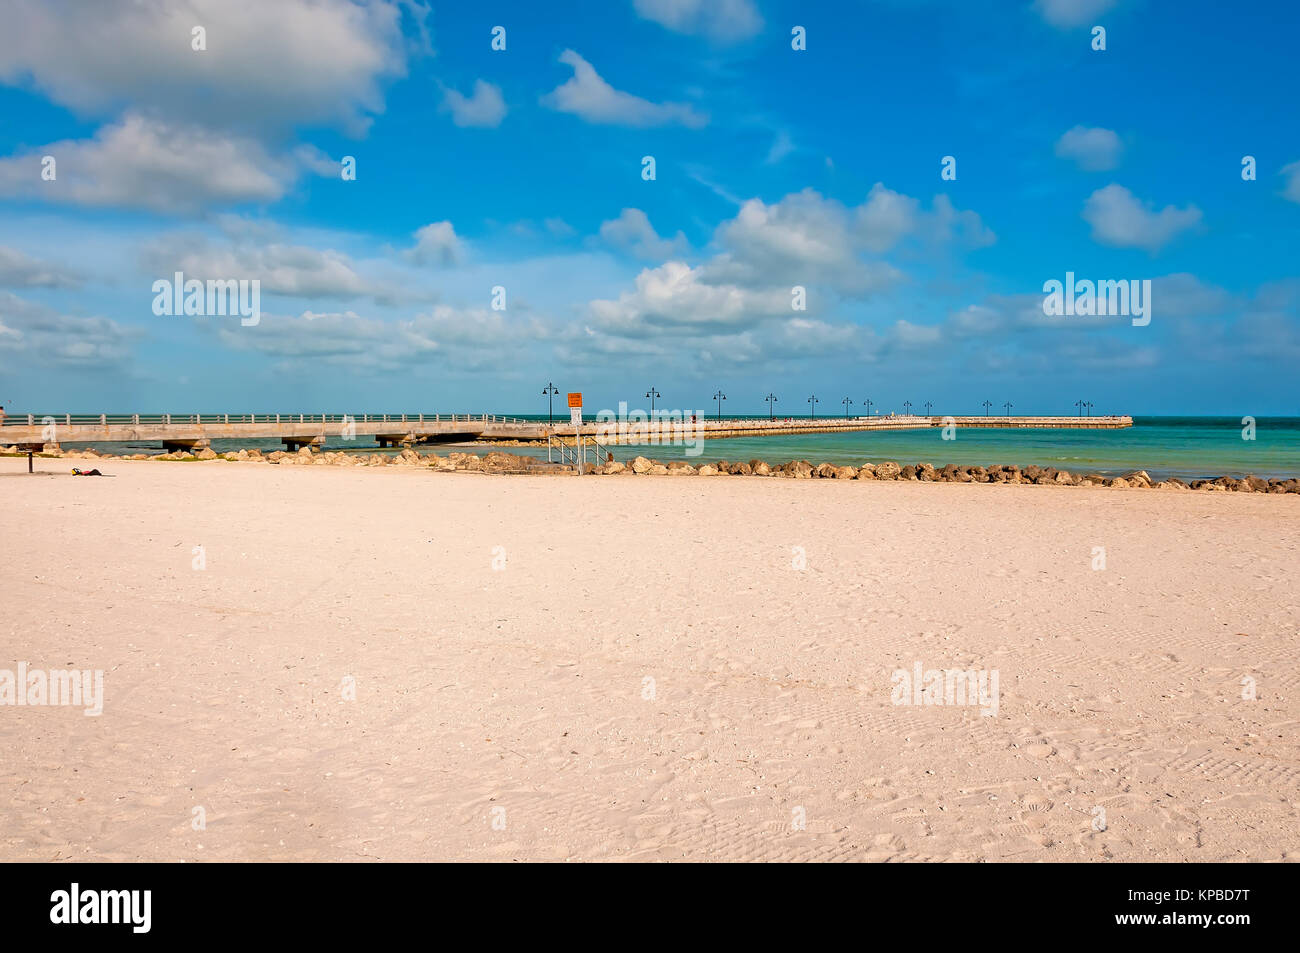 White sand and White Street Pier at Higgs Memorial Beach Key West Florida Stock Photo